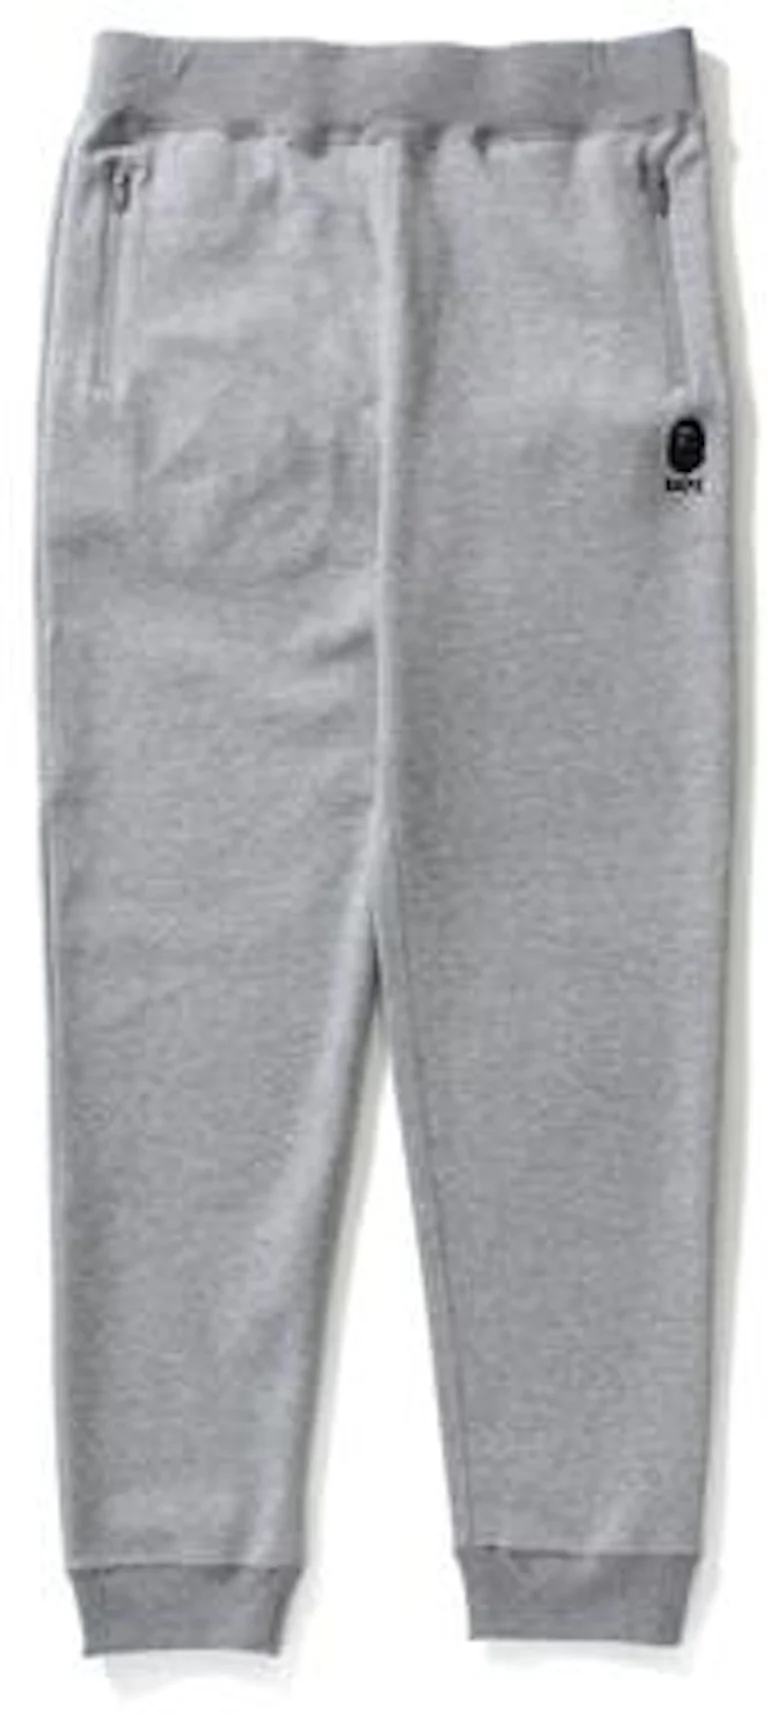 BAPE Double Knit Slim Sweat Pants Pants Gray Men's - US